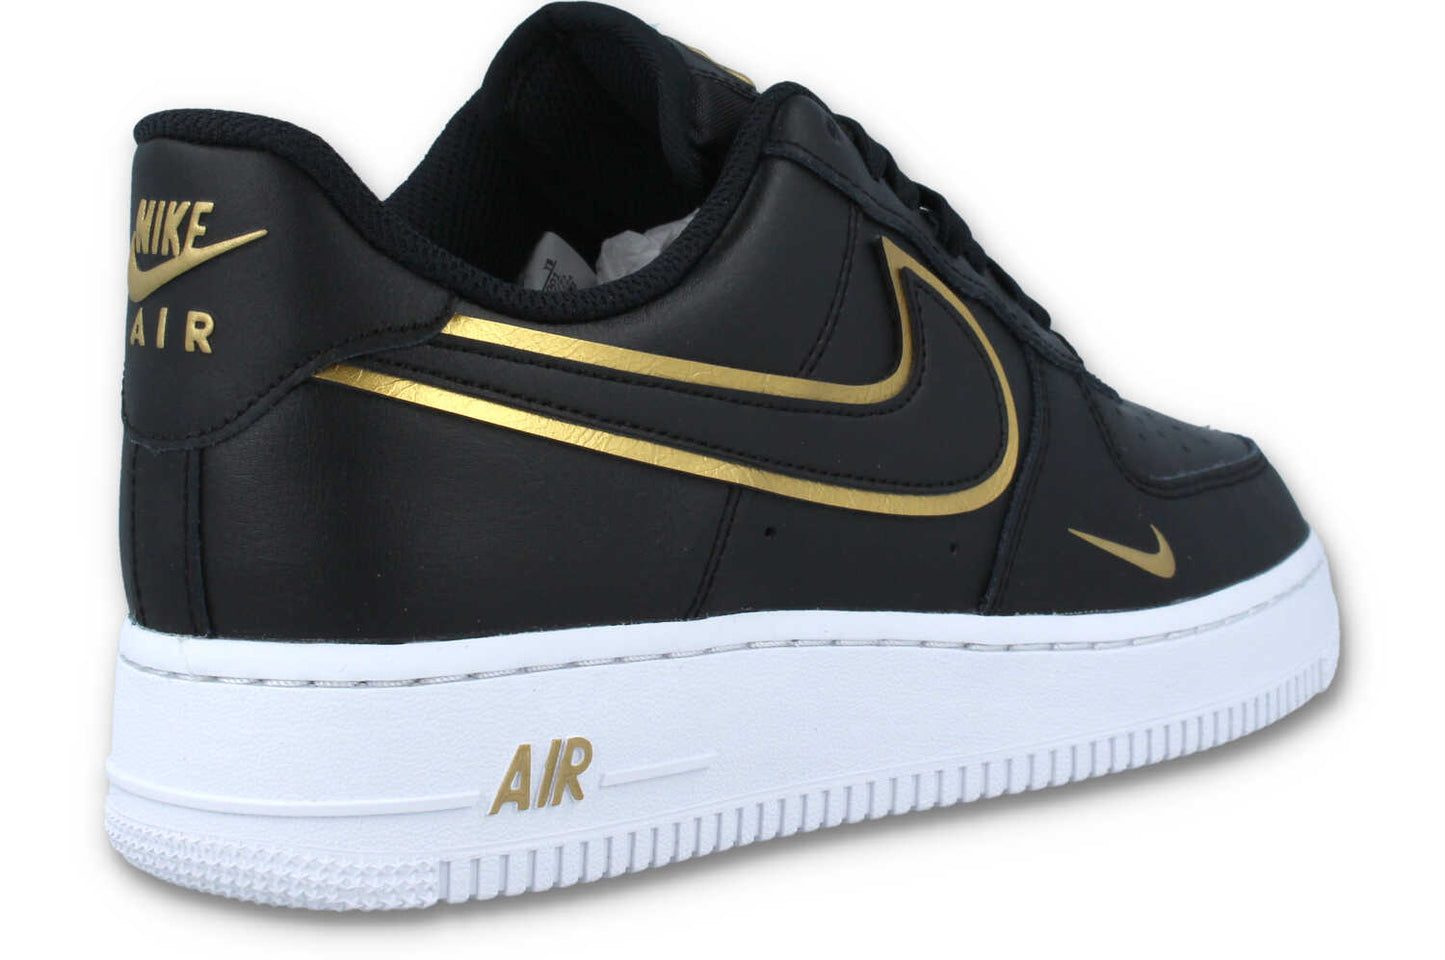 Verraad inch Charmant Nike Air Force 1 '07 LV8 (schwarz / gold) – Schrittmacher Sneakerhandlung